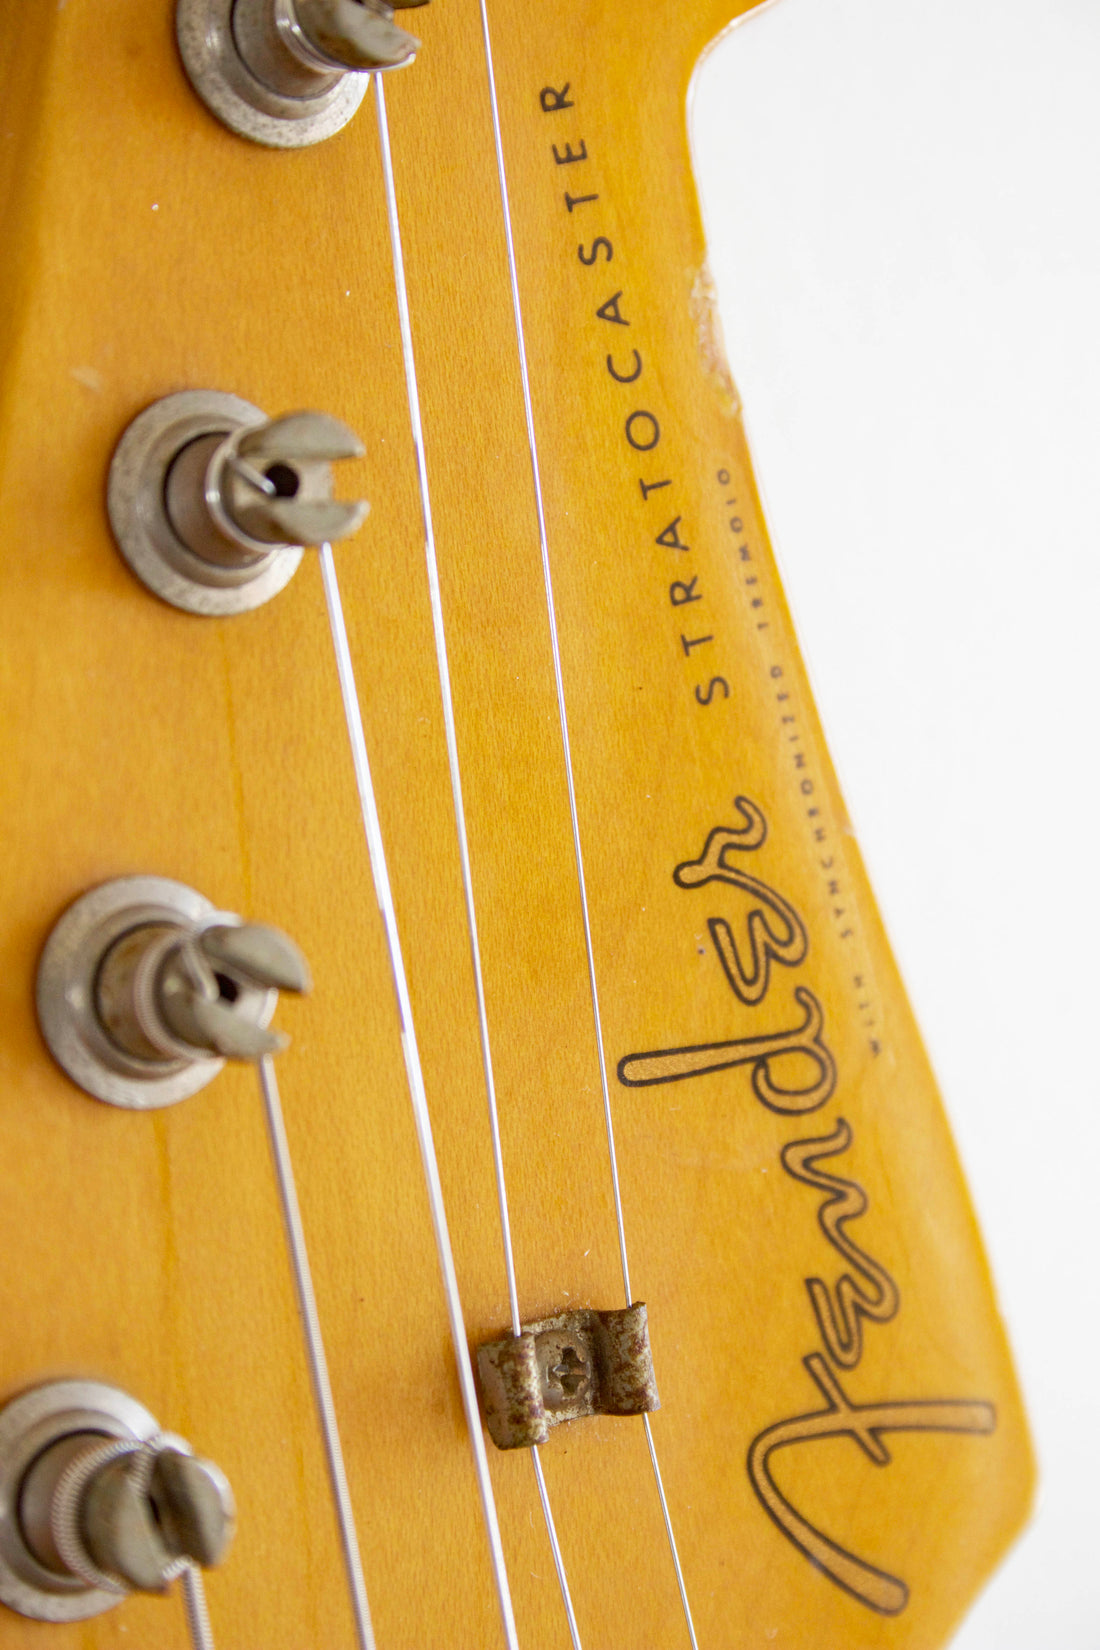 Fender Stratocaster '57 Reissue Lace Sensors Vintage Gold 1993/4